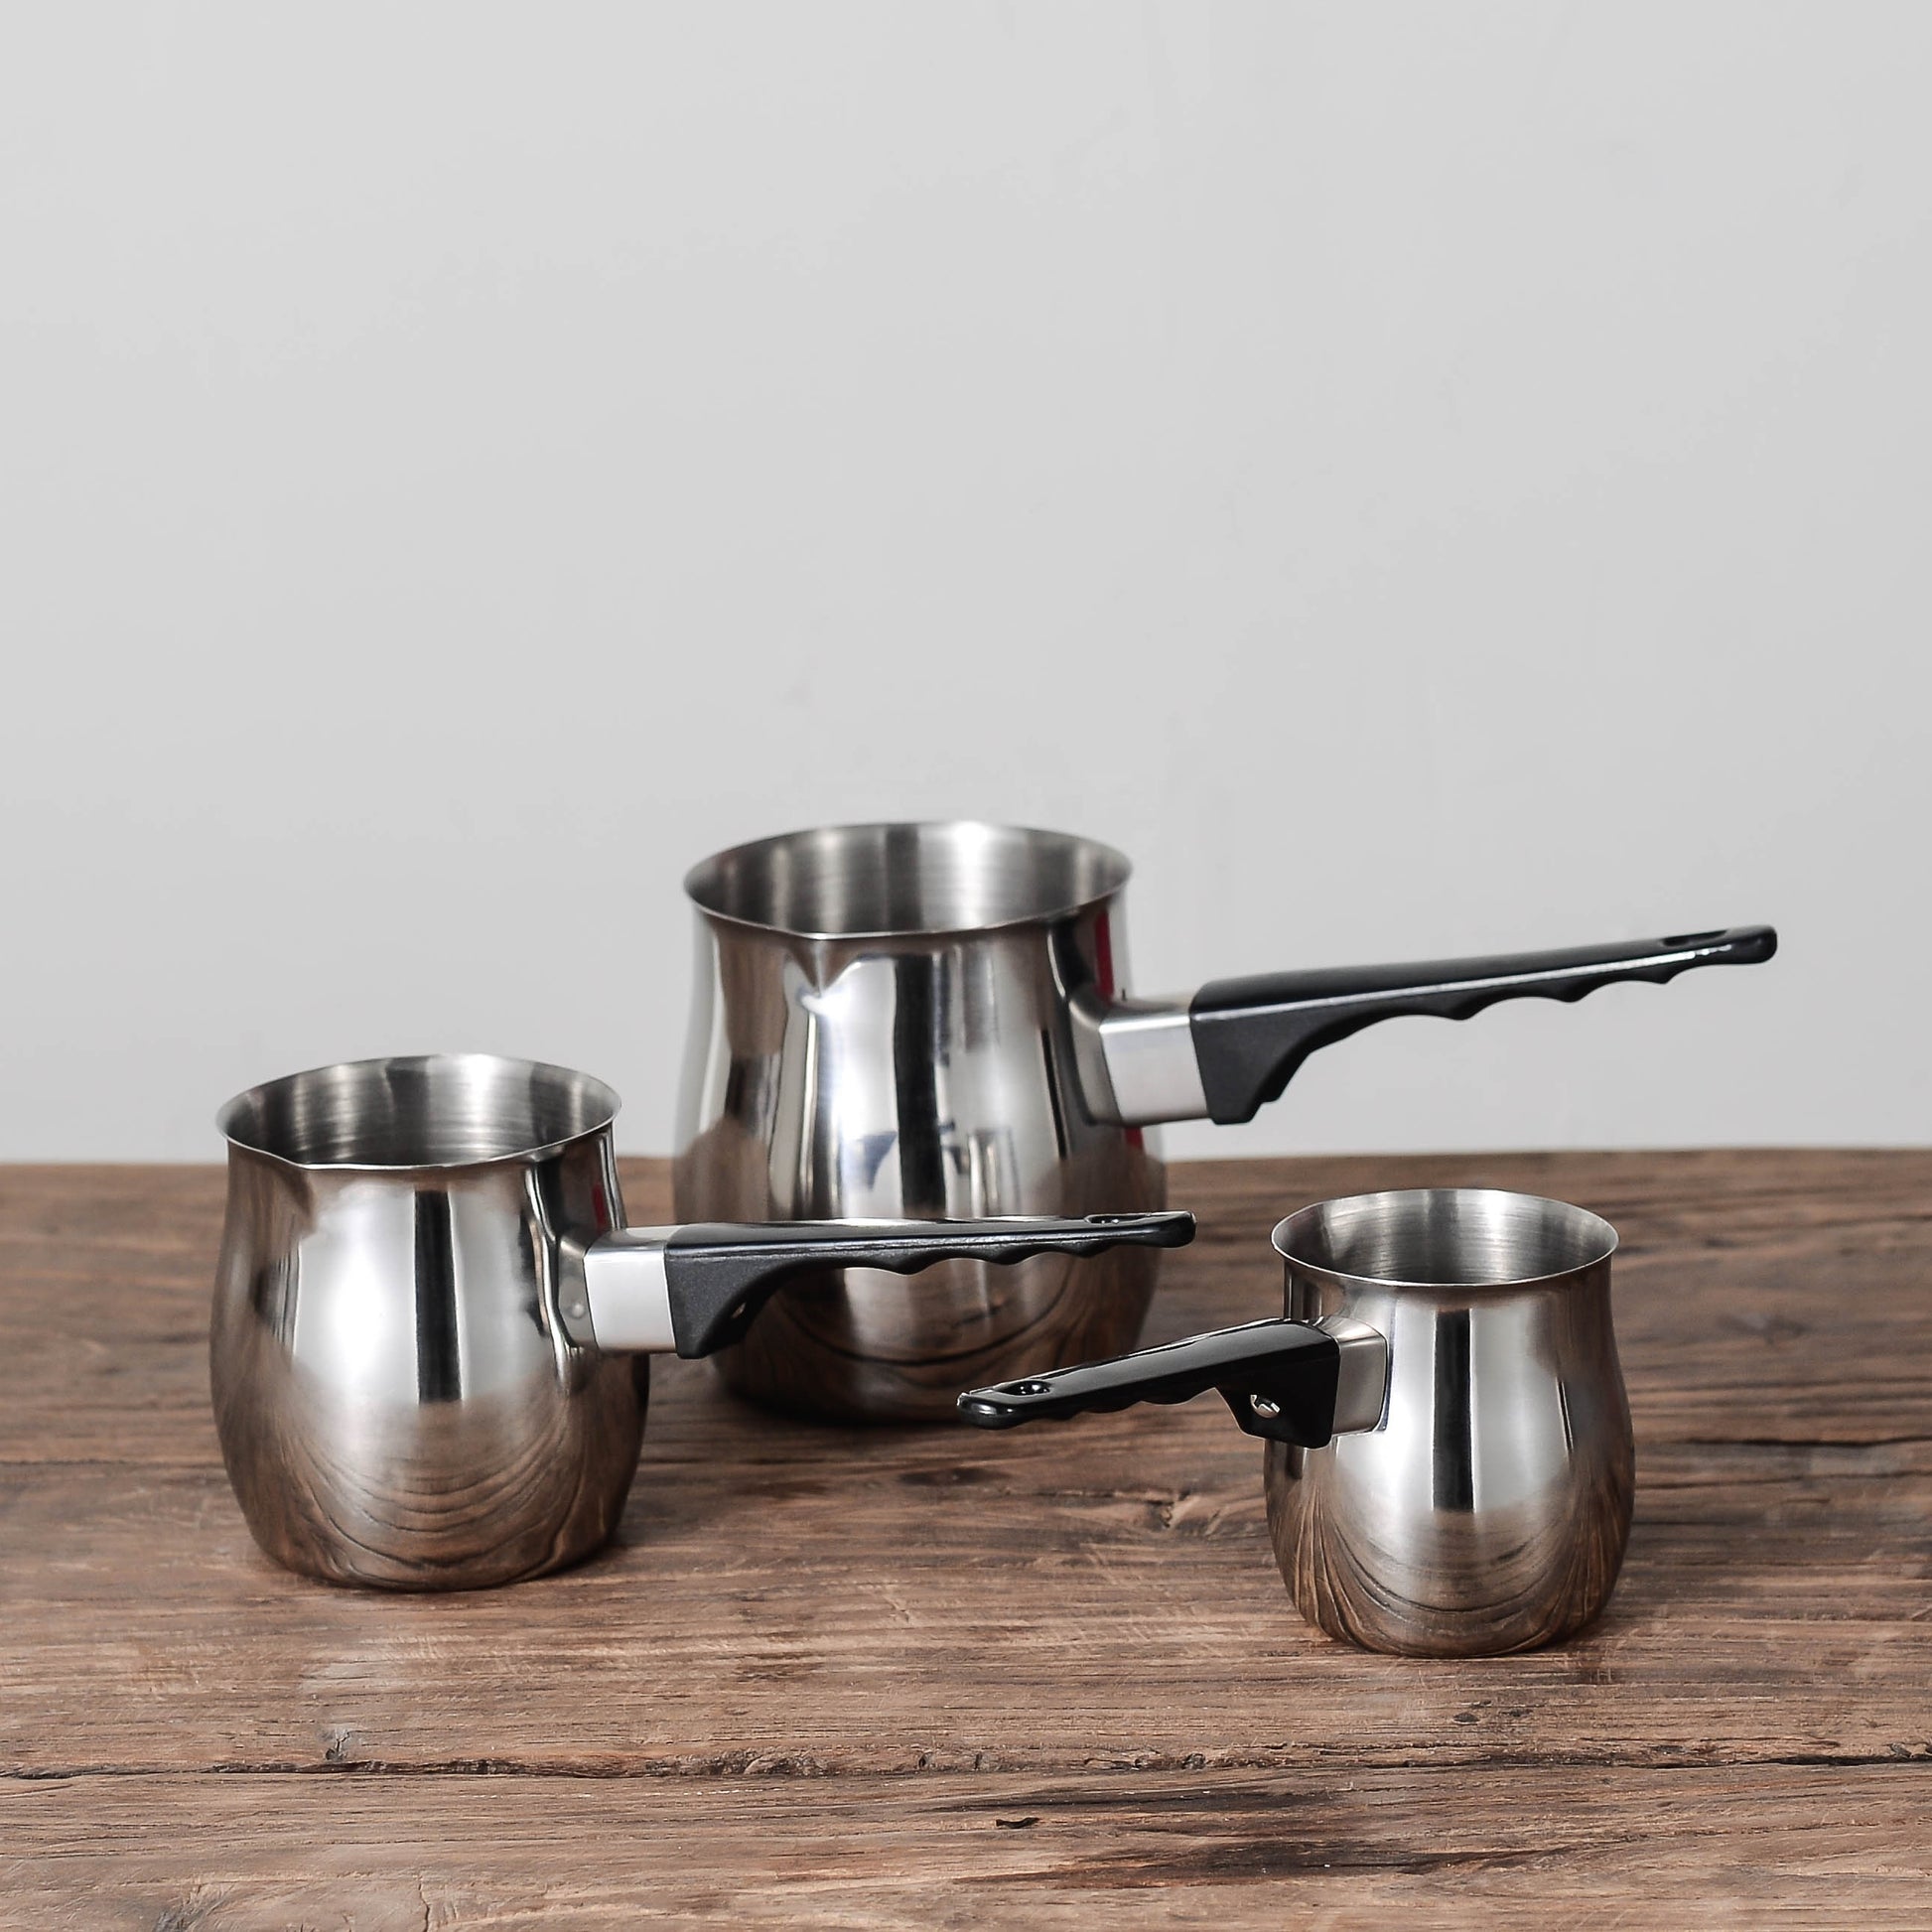 Korkmaz Tombik 3 Piece Stainless Steel Turkish Coffee Pot Set in Silver